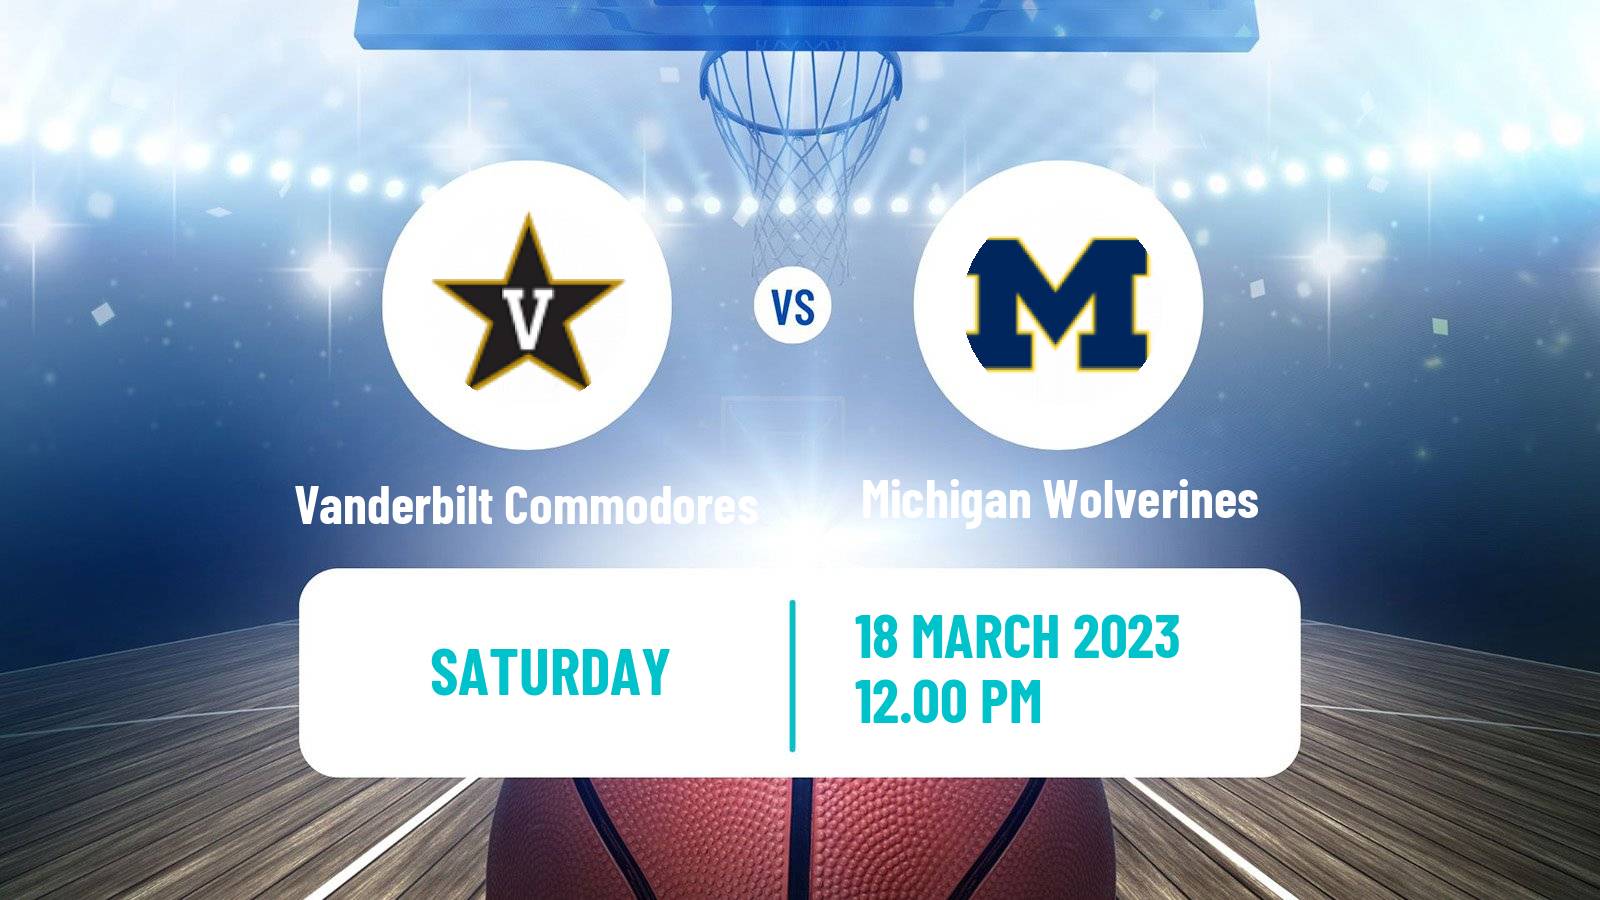 Basketball NIT Vanderbilt Commodores - Michigan Wolverines